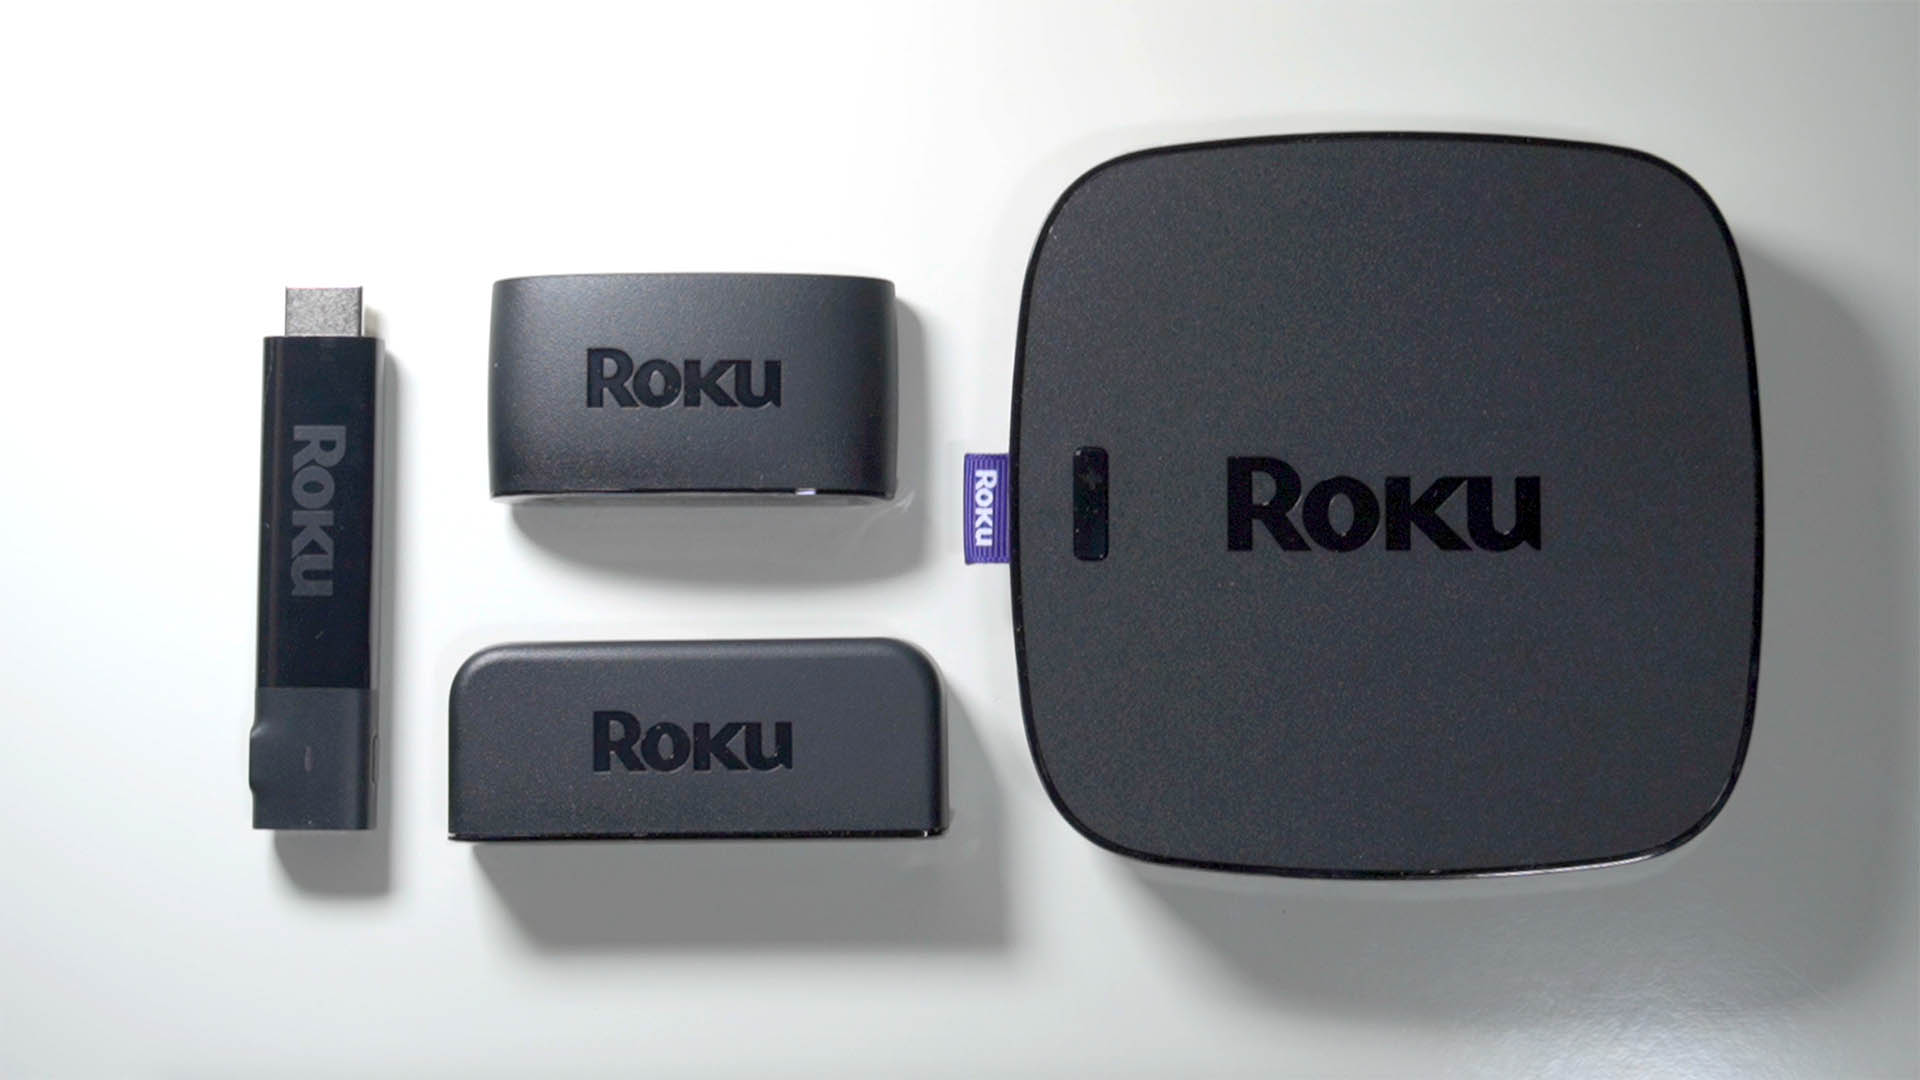 Roku Devices